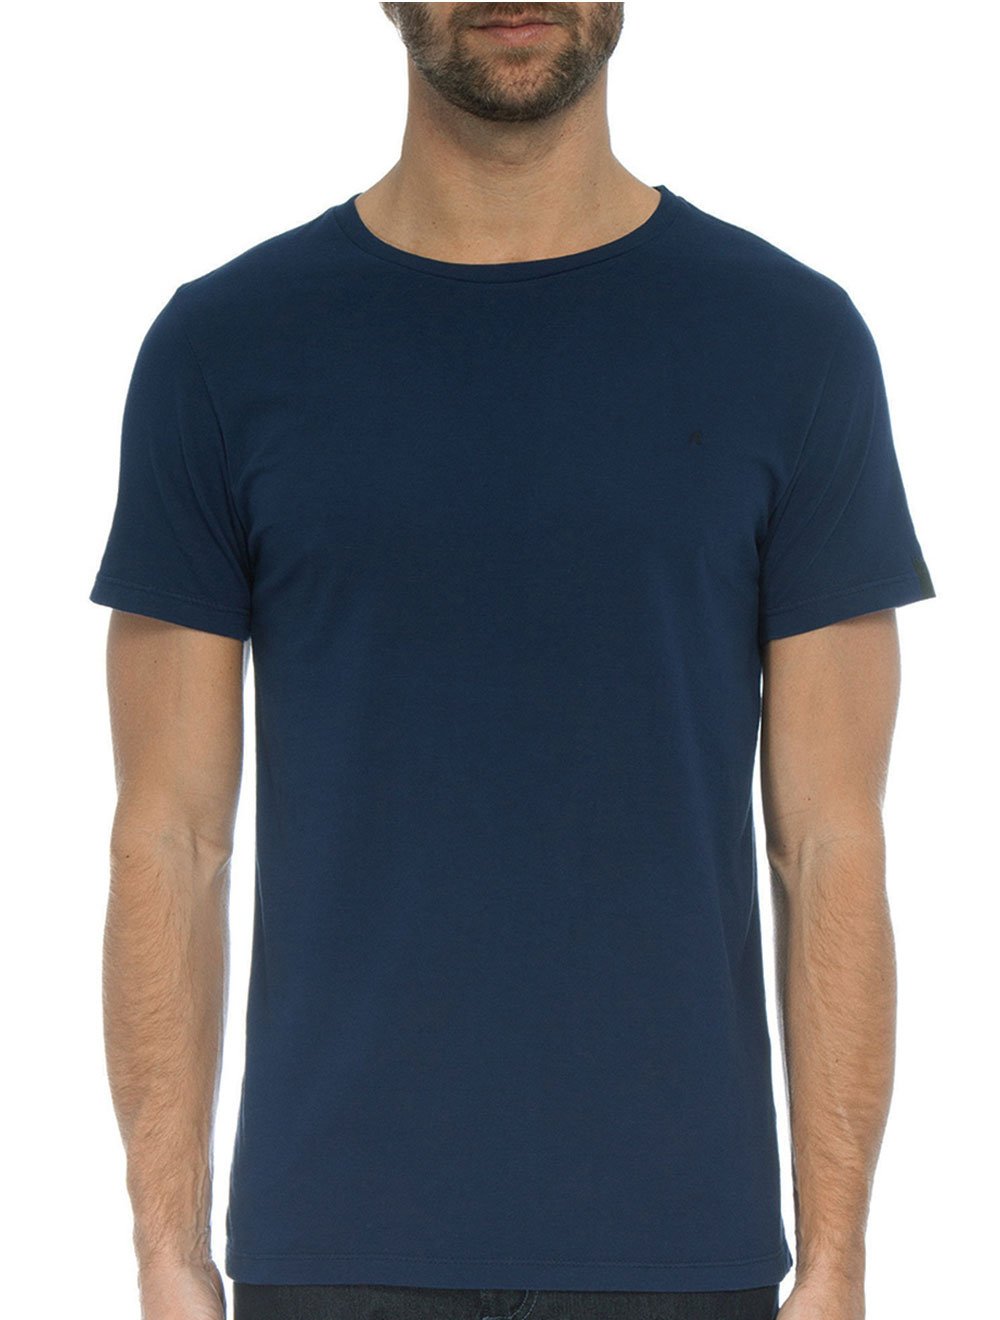 Camiseta Replay Masculina R Basic Azul Noturno